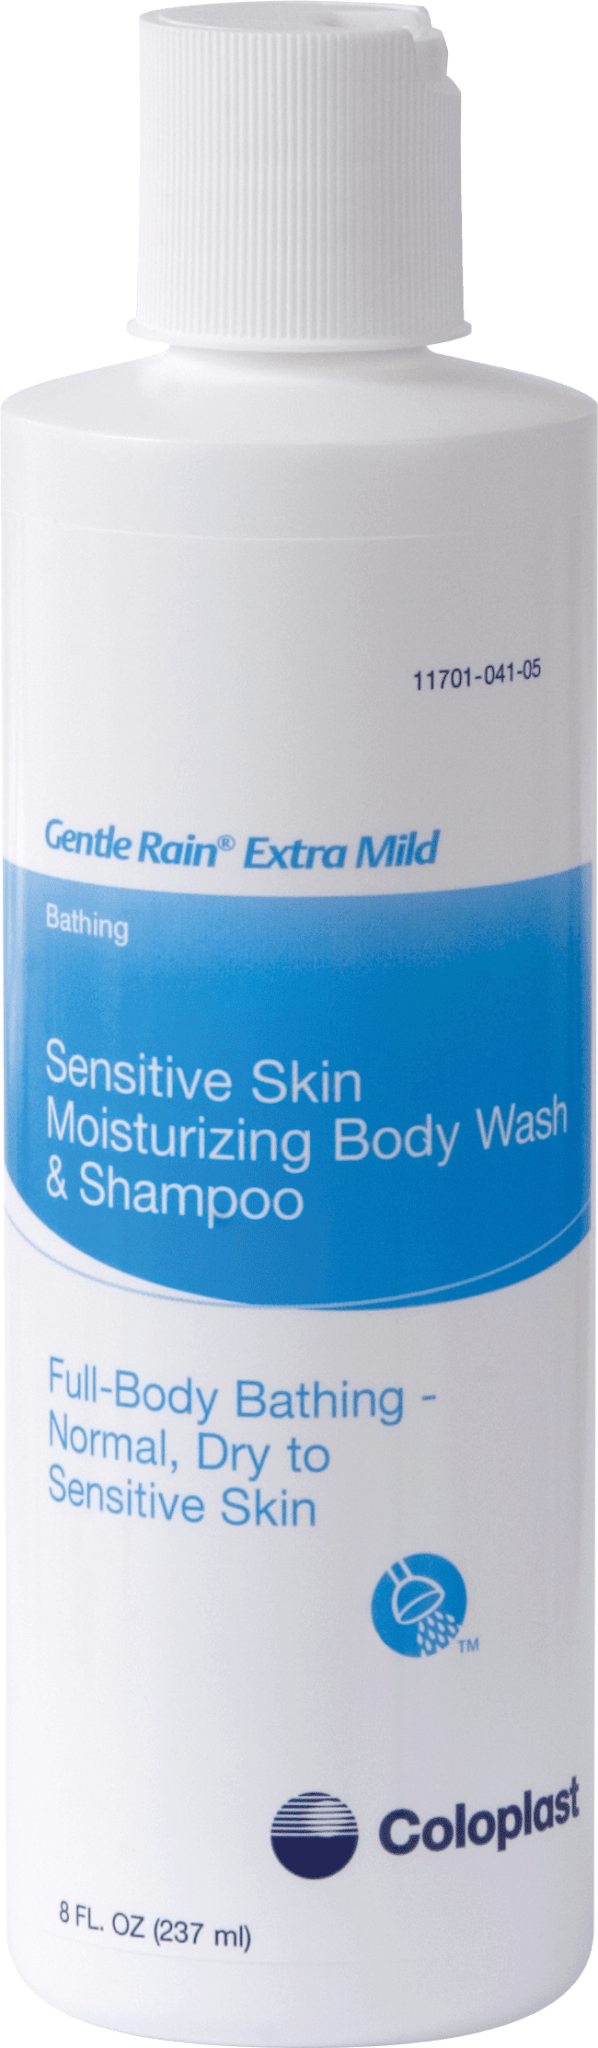 EA/1 - Coloplast Gentle Rain&reg; Extra Mild Moisturizing Body Wash & Shampoo, 8 oz - Best Buy Medical Supplies